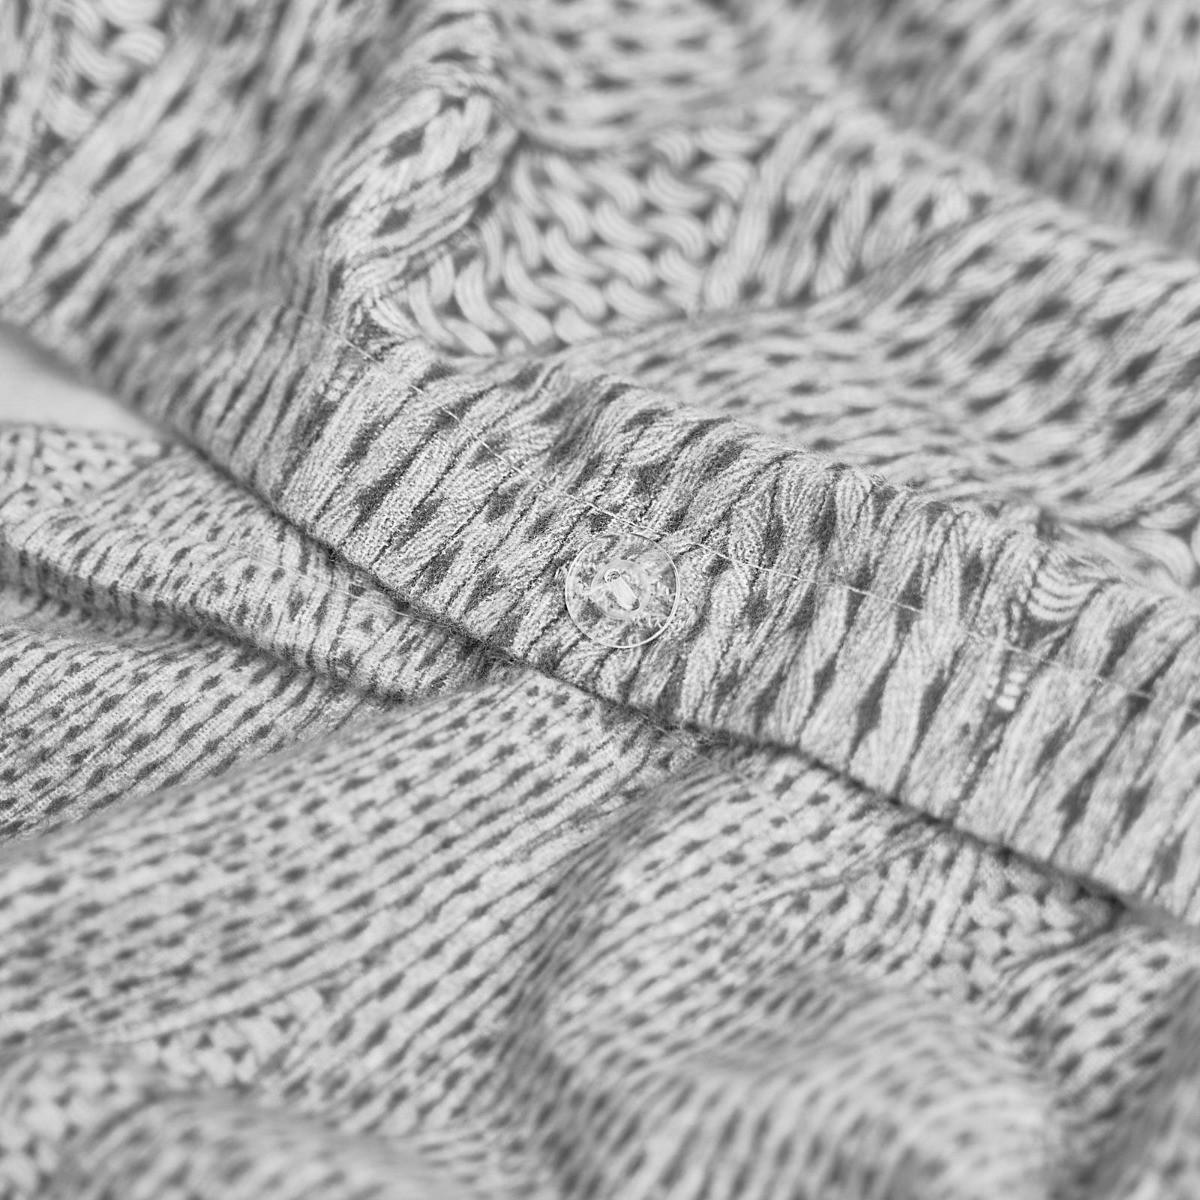 Dreamscene Chunky Knit Print Brushed Cotton Duvet Set, Grey - Single>